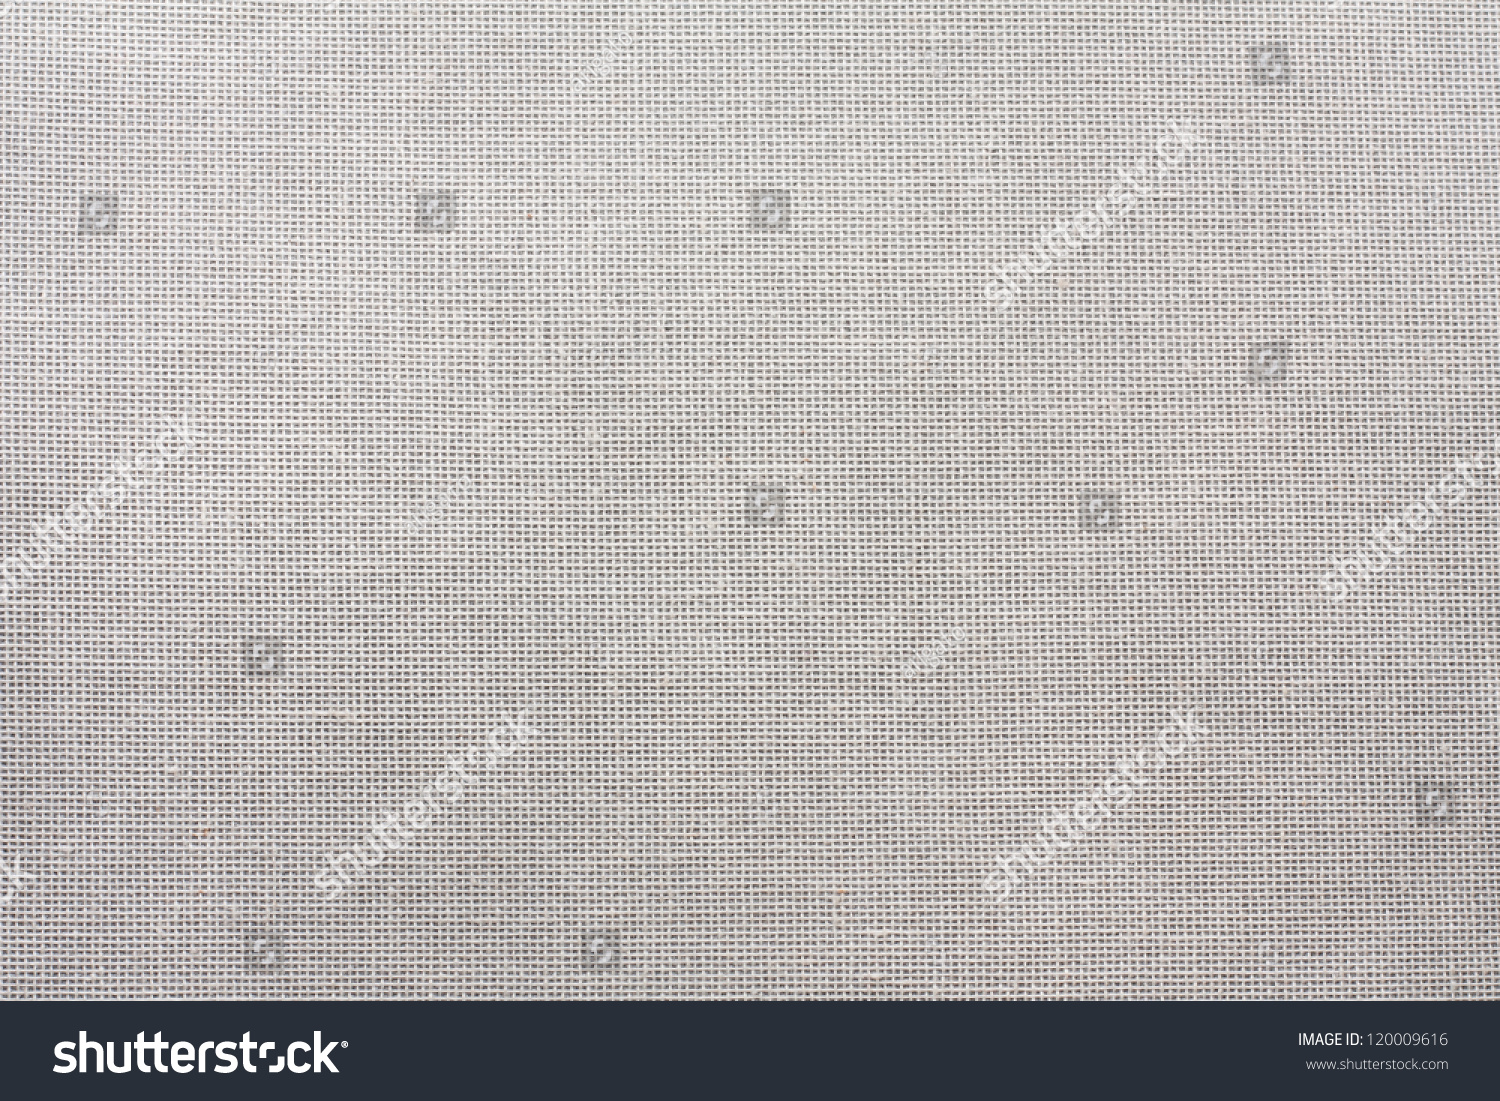 Grey Fabric Texture Stock Photo 120009616 : Shutterstock